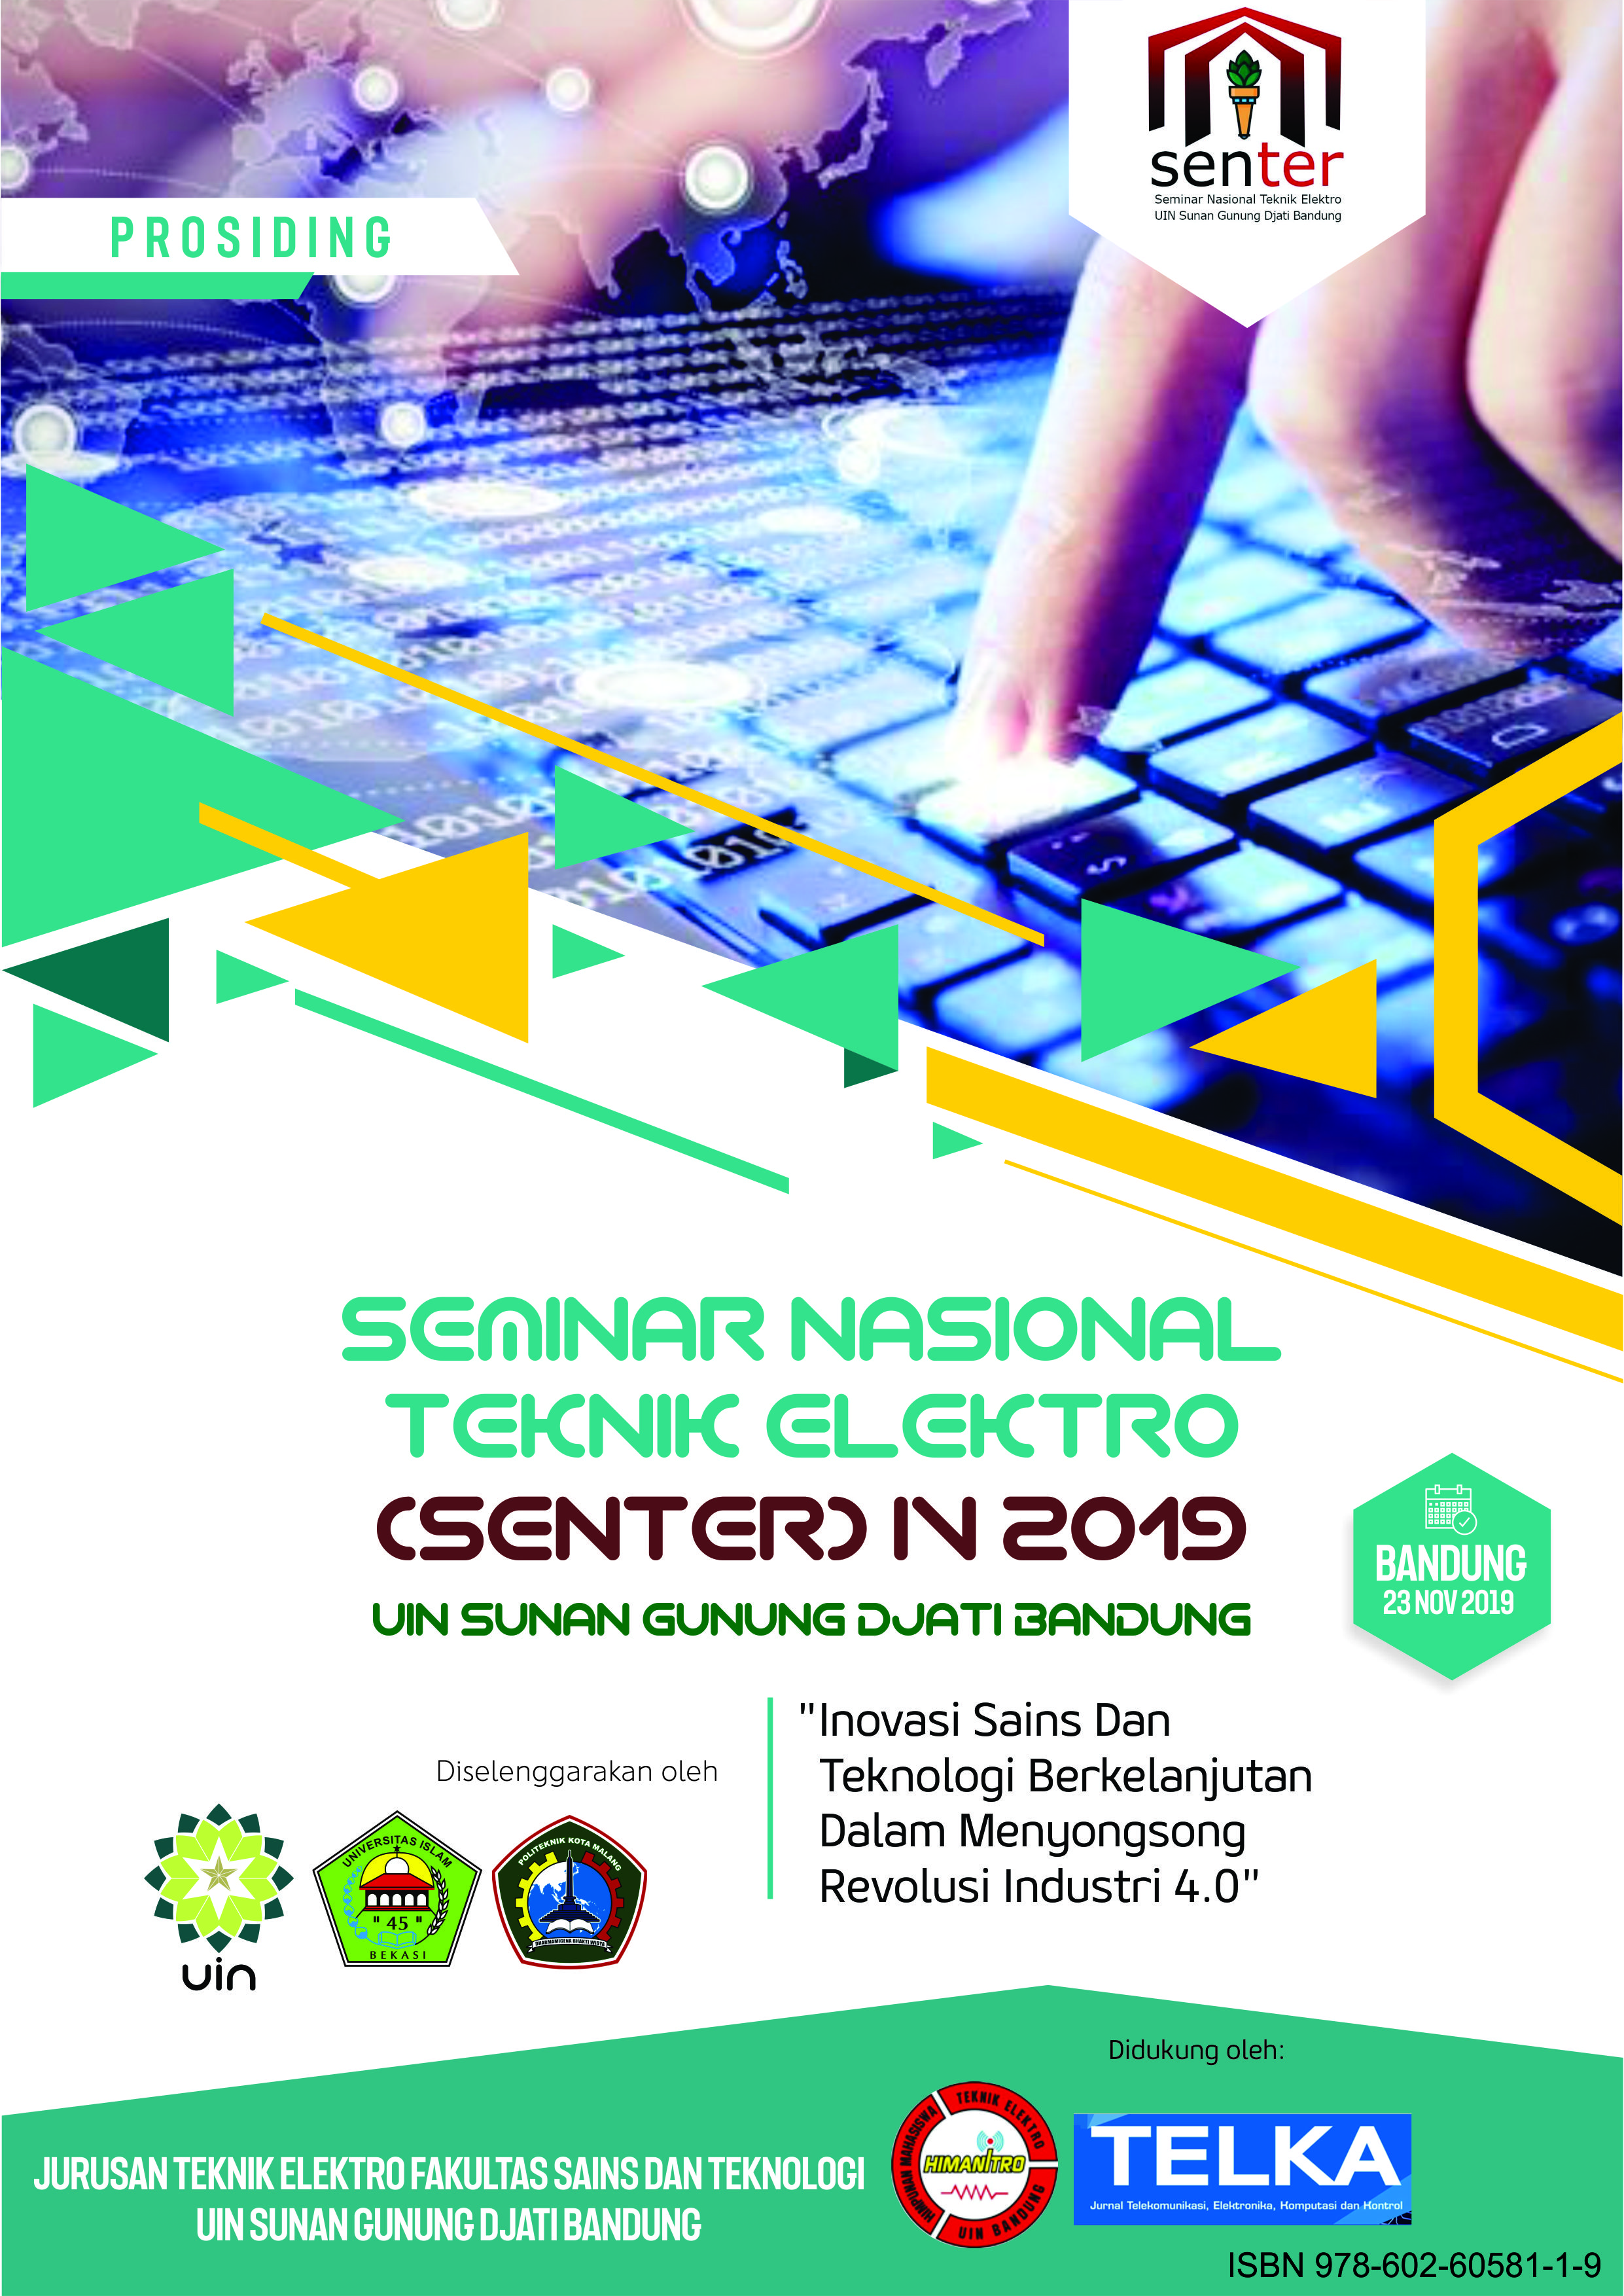 					View Seminar Nasional Teknik Elektro UIN Sunan Gunung Djati Bandung (SENTER 2019)
				